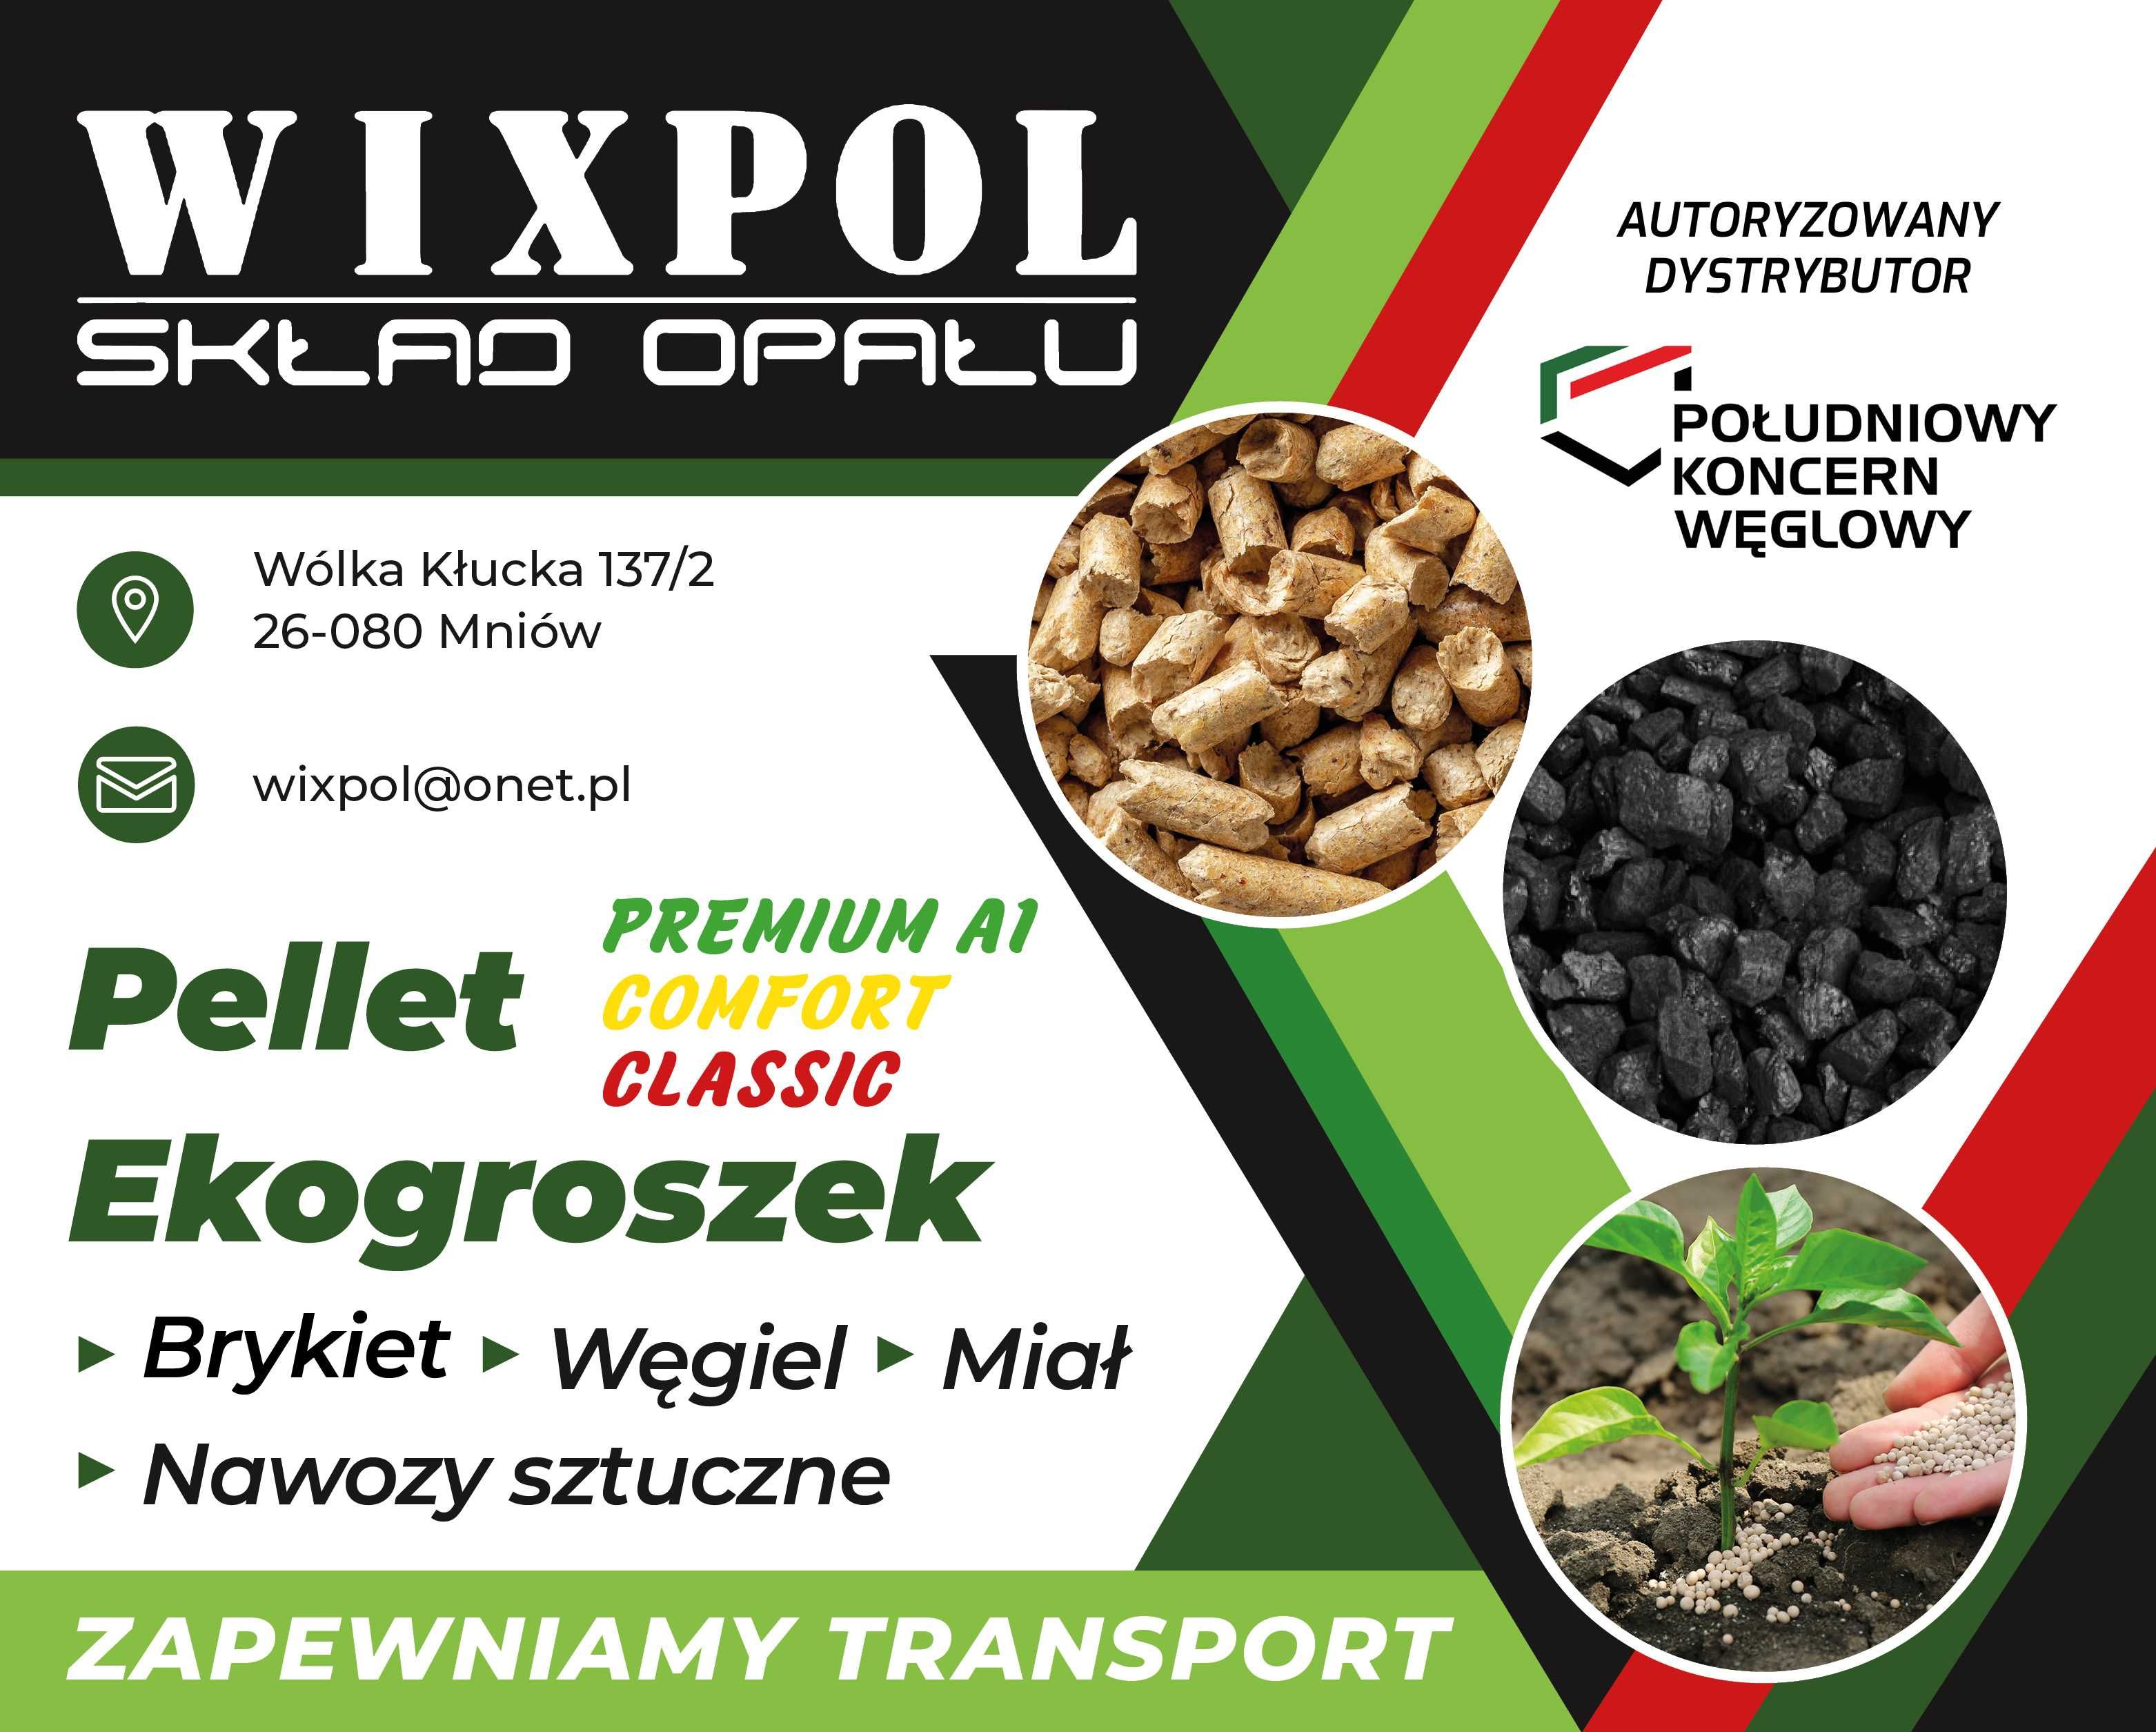 Skład opału WIXPOL węgiel workowany, ekogroszek, pellet